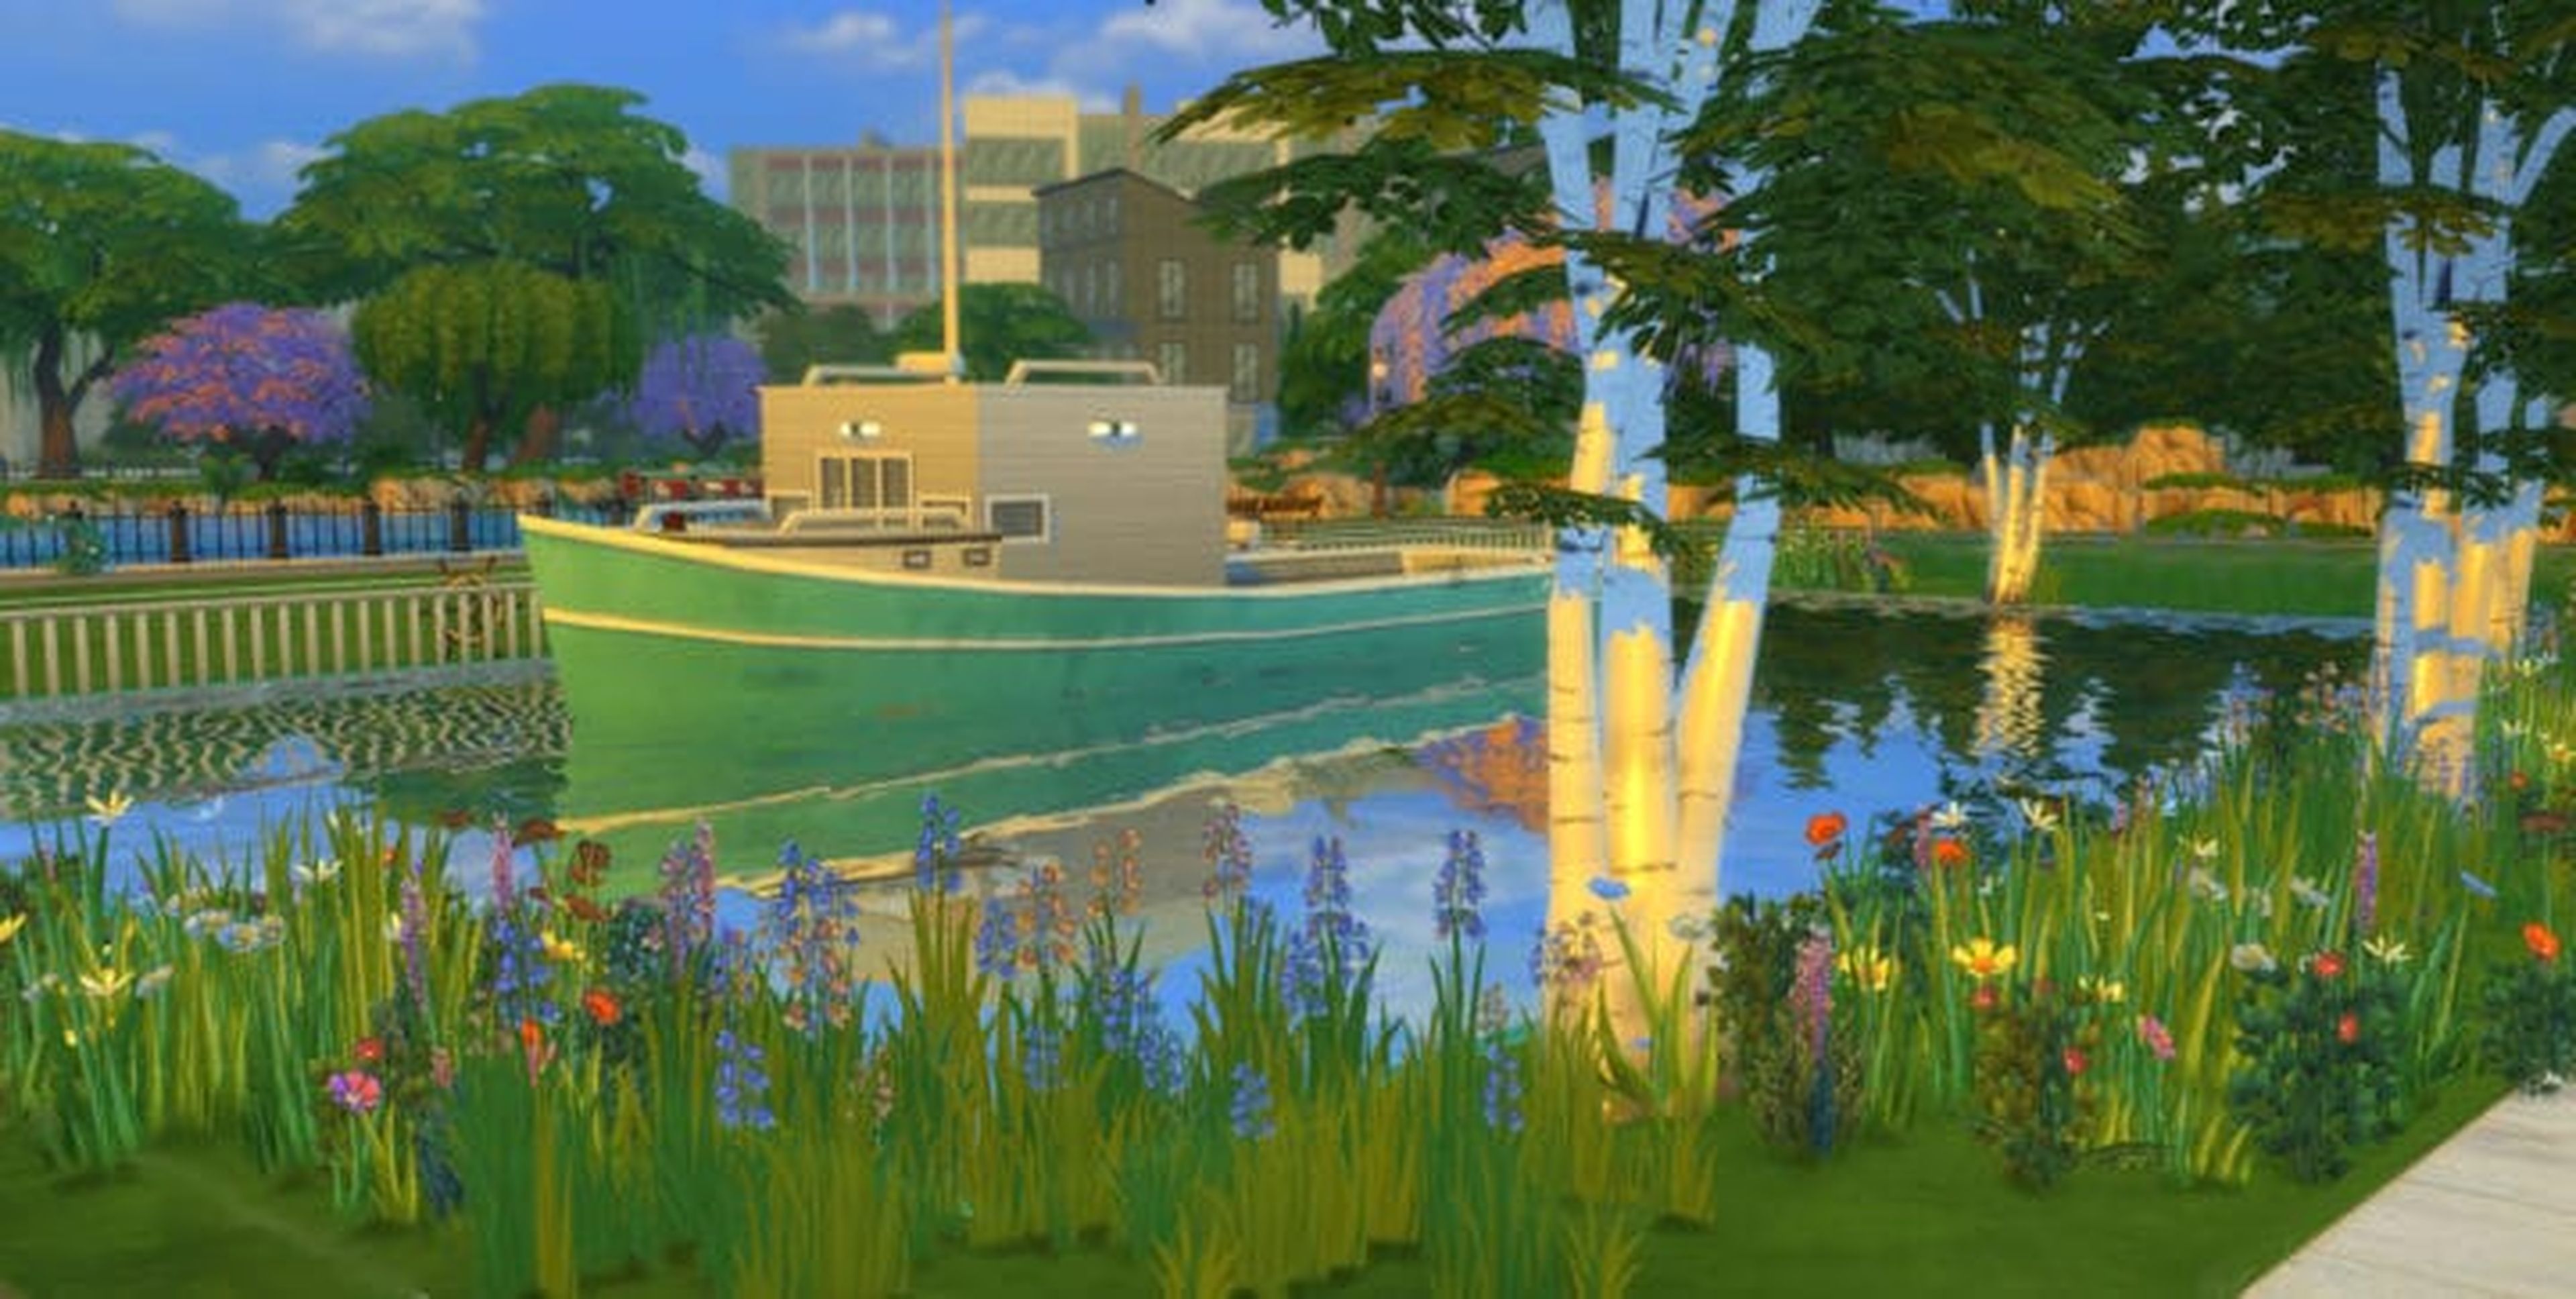 Los Sims 4 mods